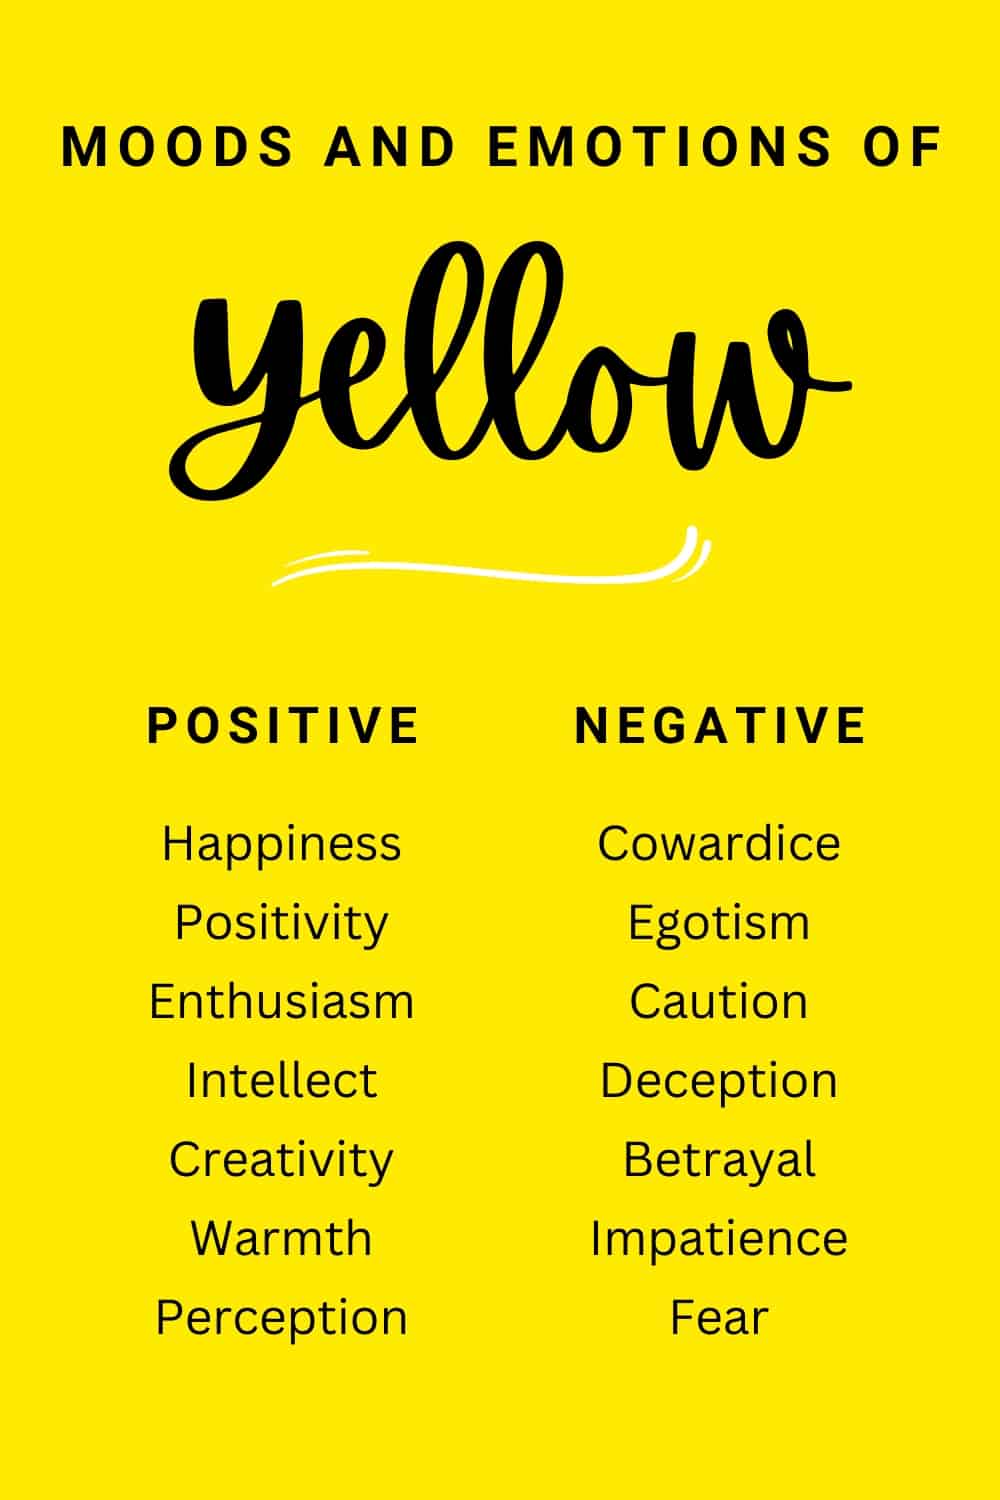 Yellow emotions